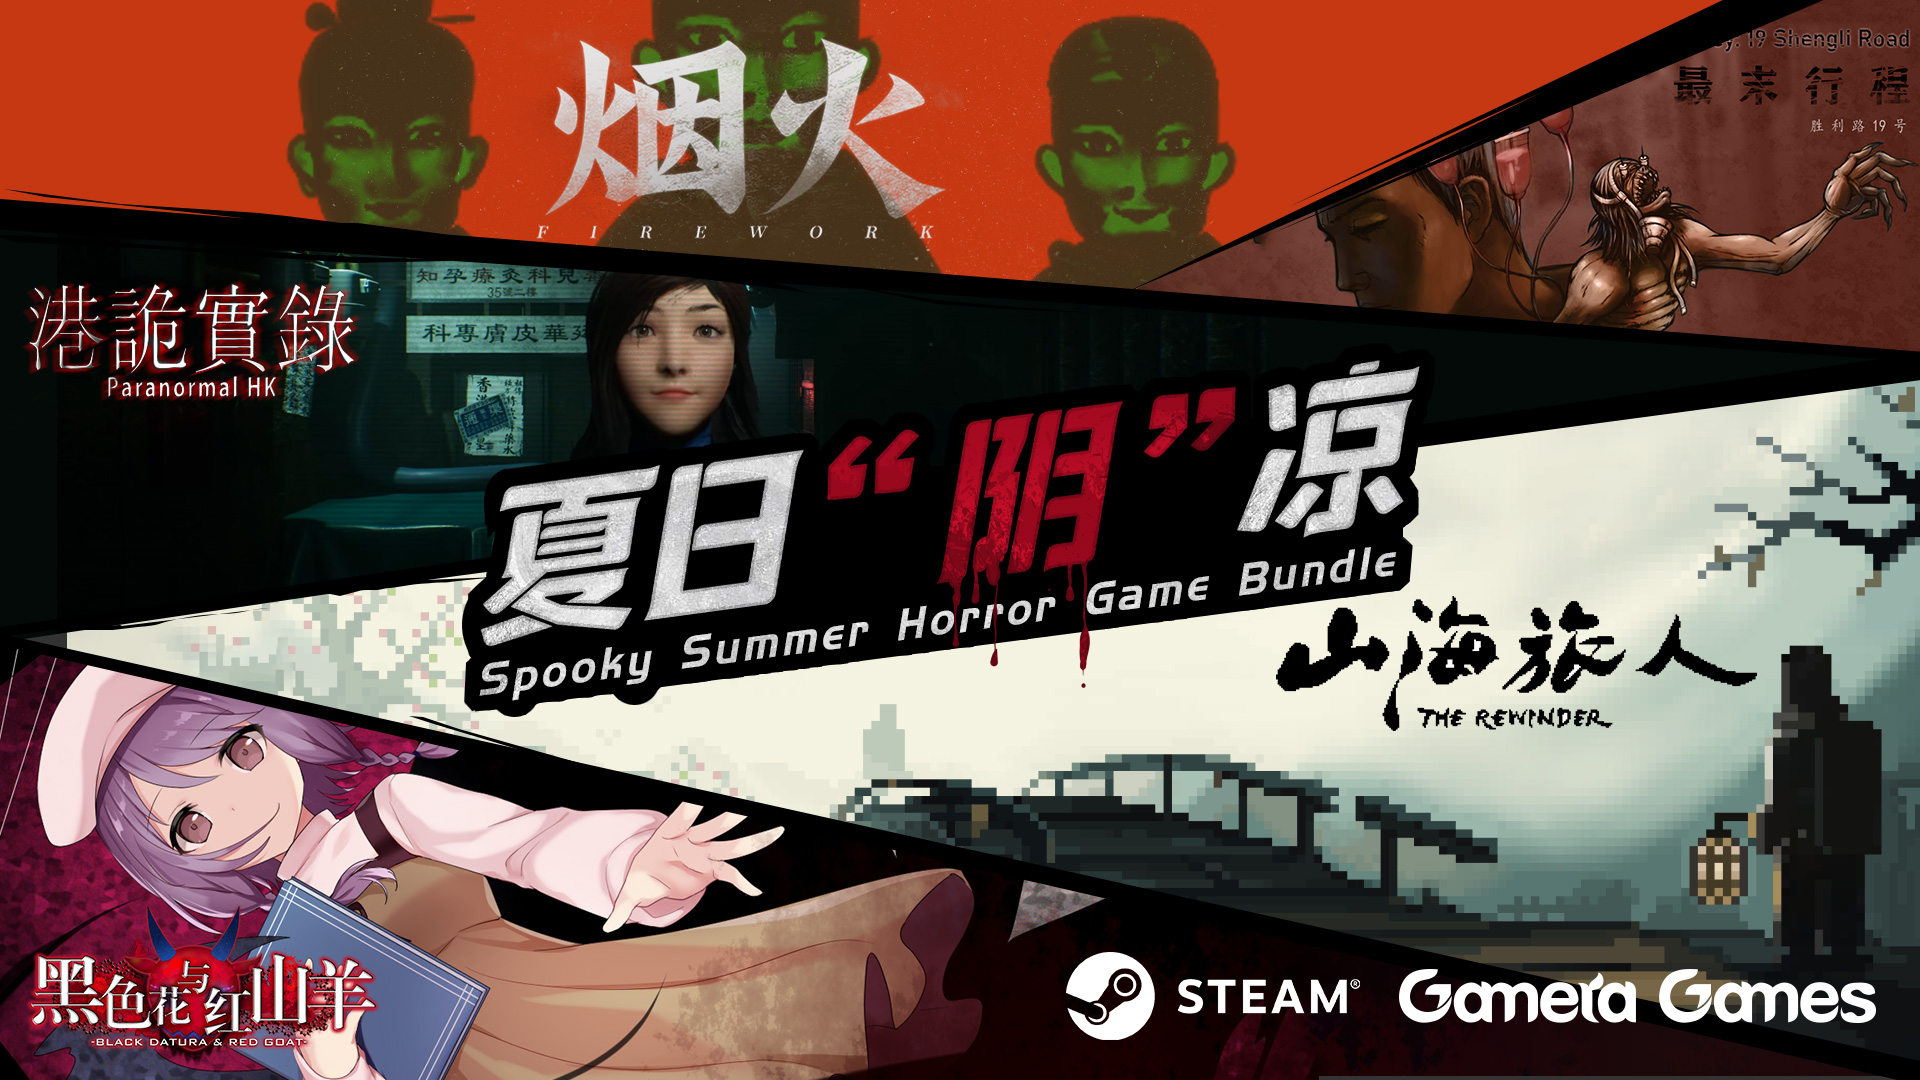 Steam夏促開啟 Gamera Games推出“陰間遊戲”同捆包